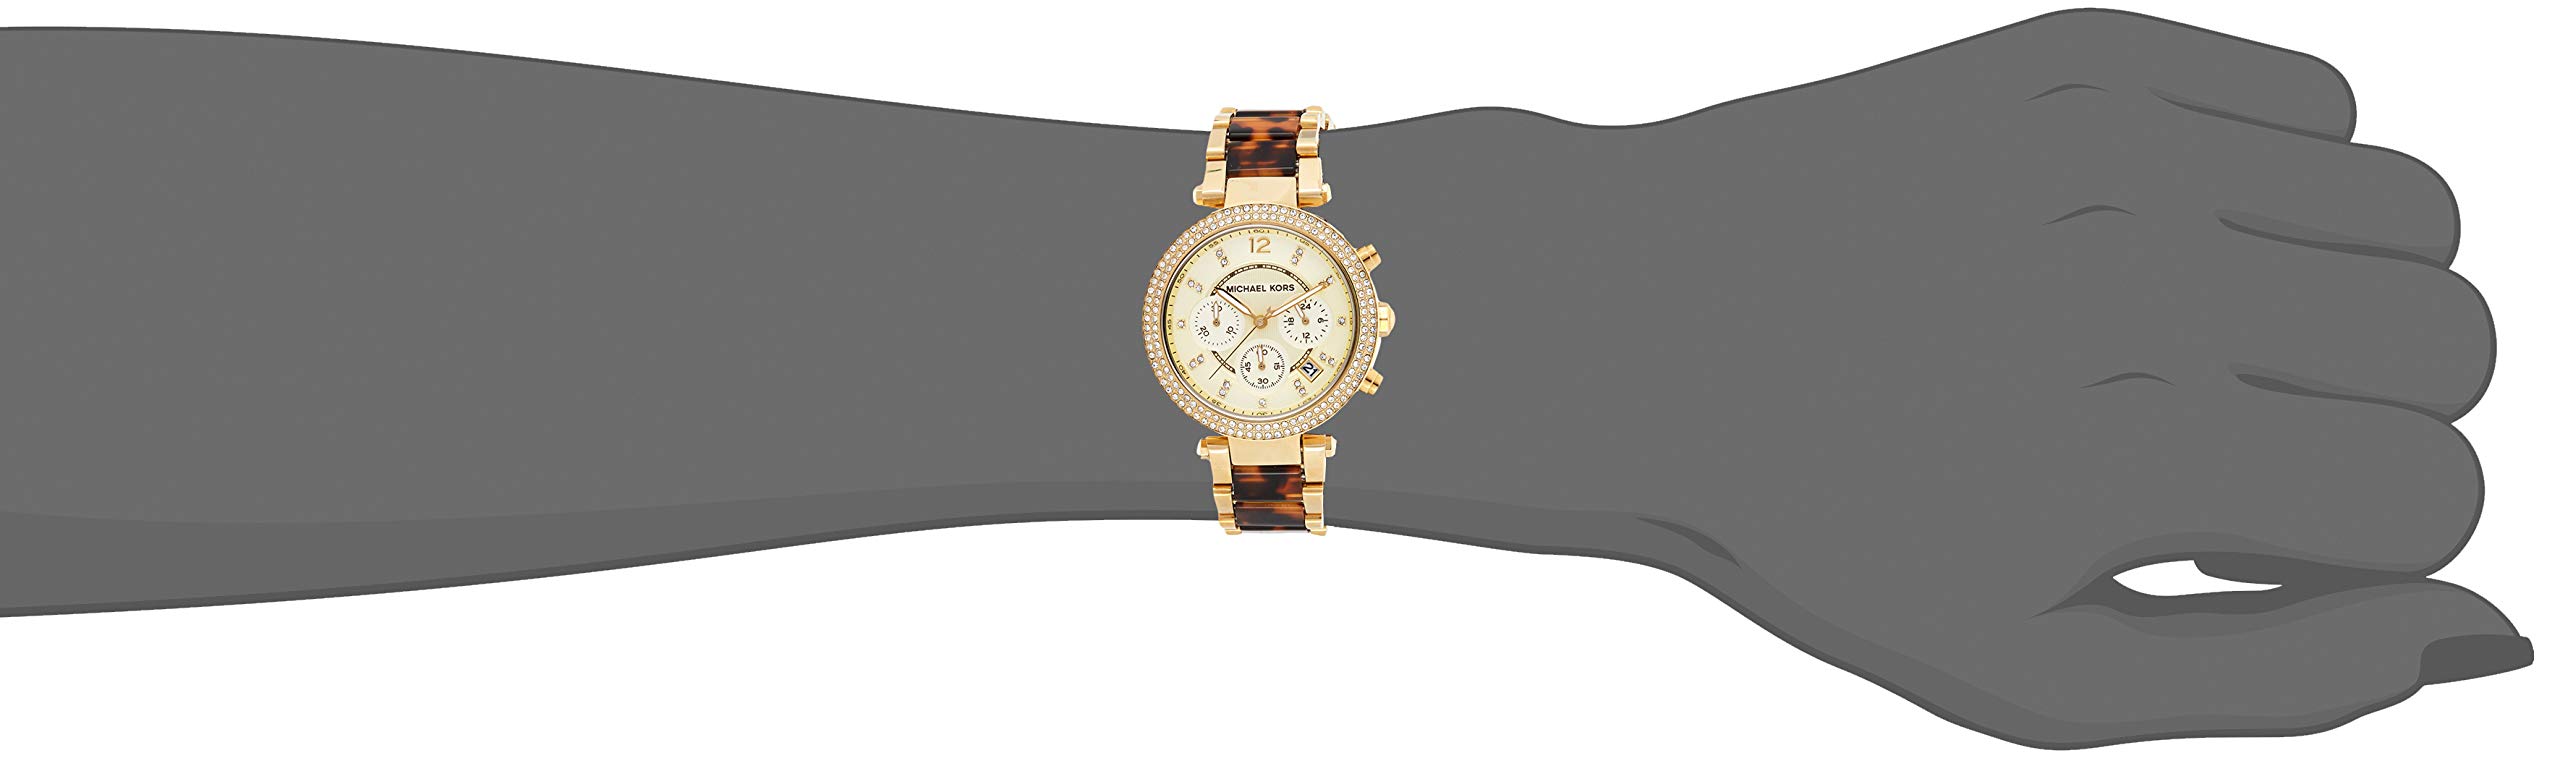 Michael Kors Women's Parker Gold Tortoise Watch MK5688